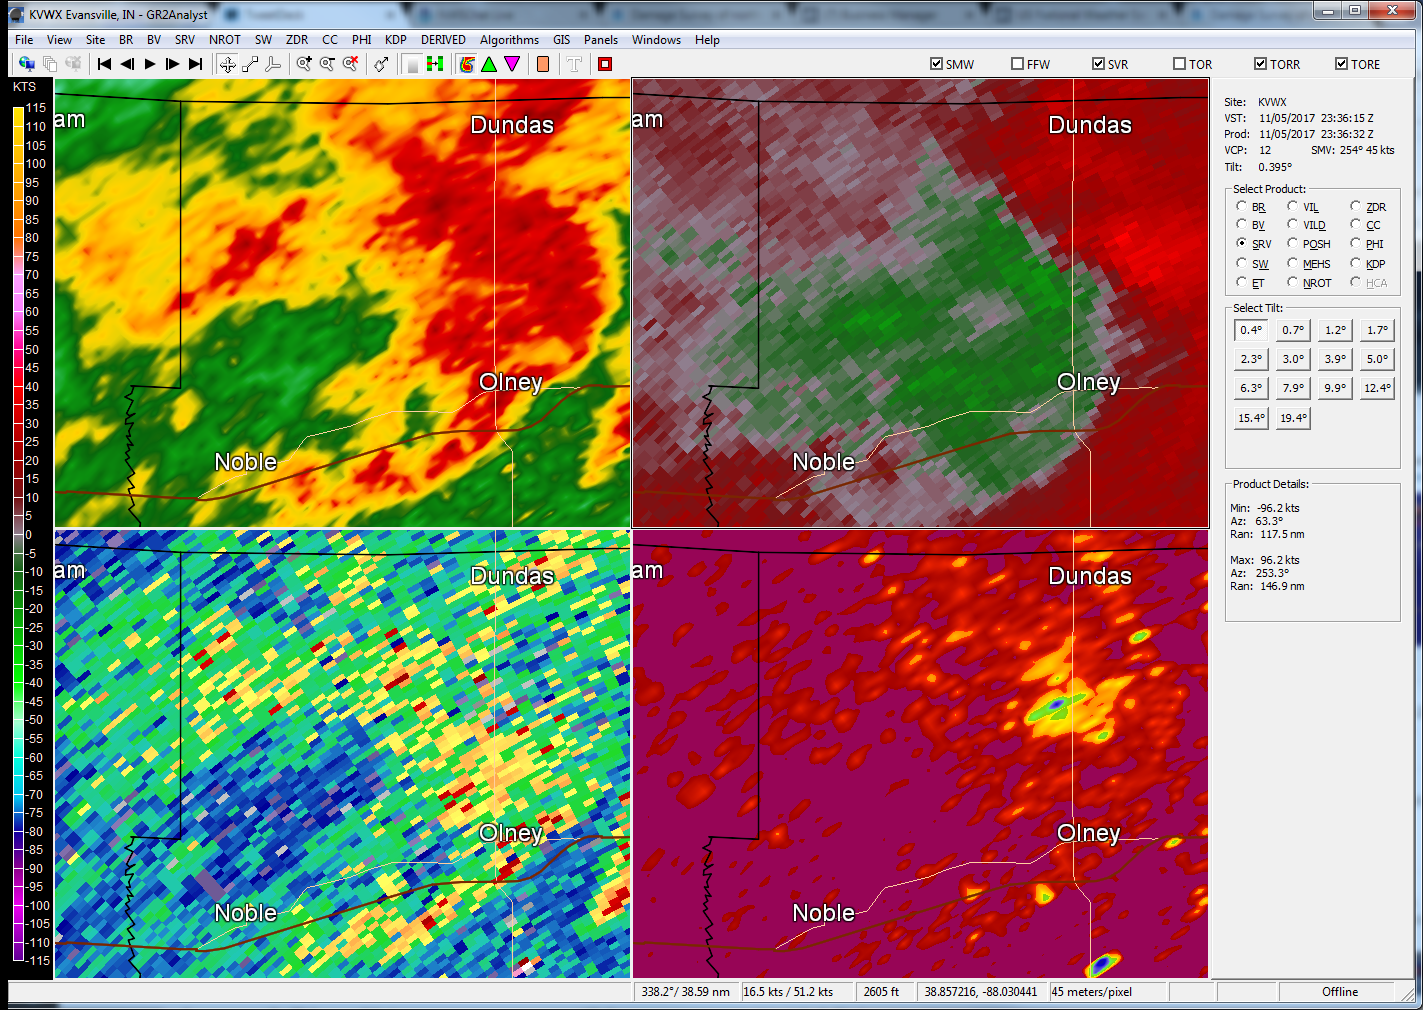 Evansville radar image from 5:36 pm